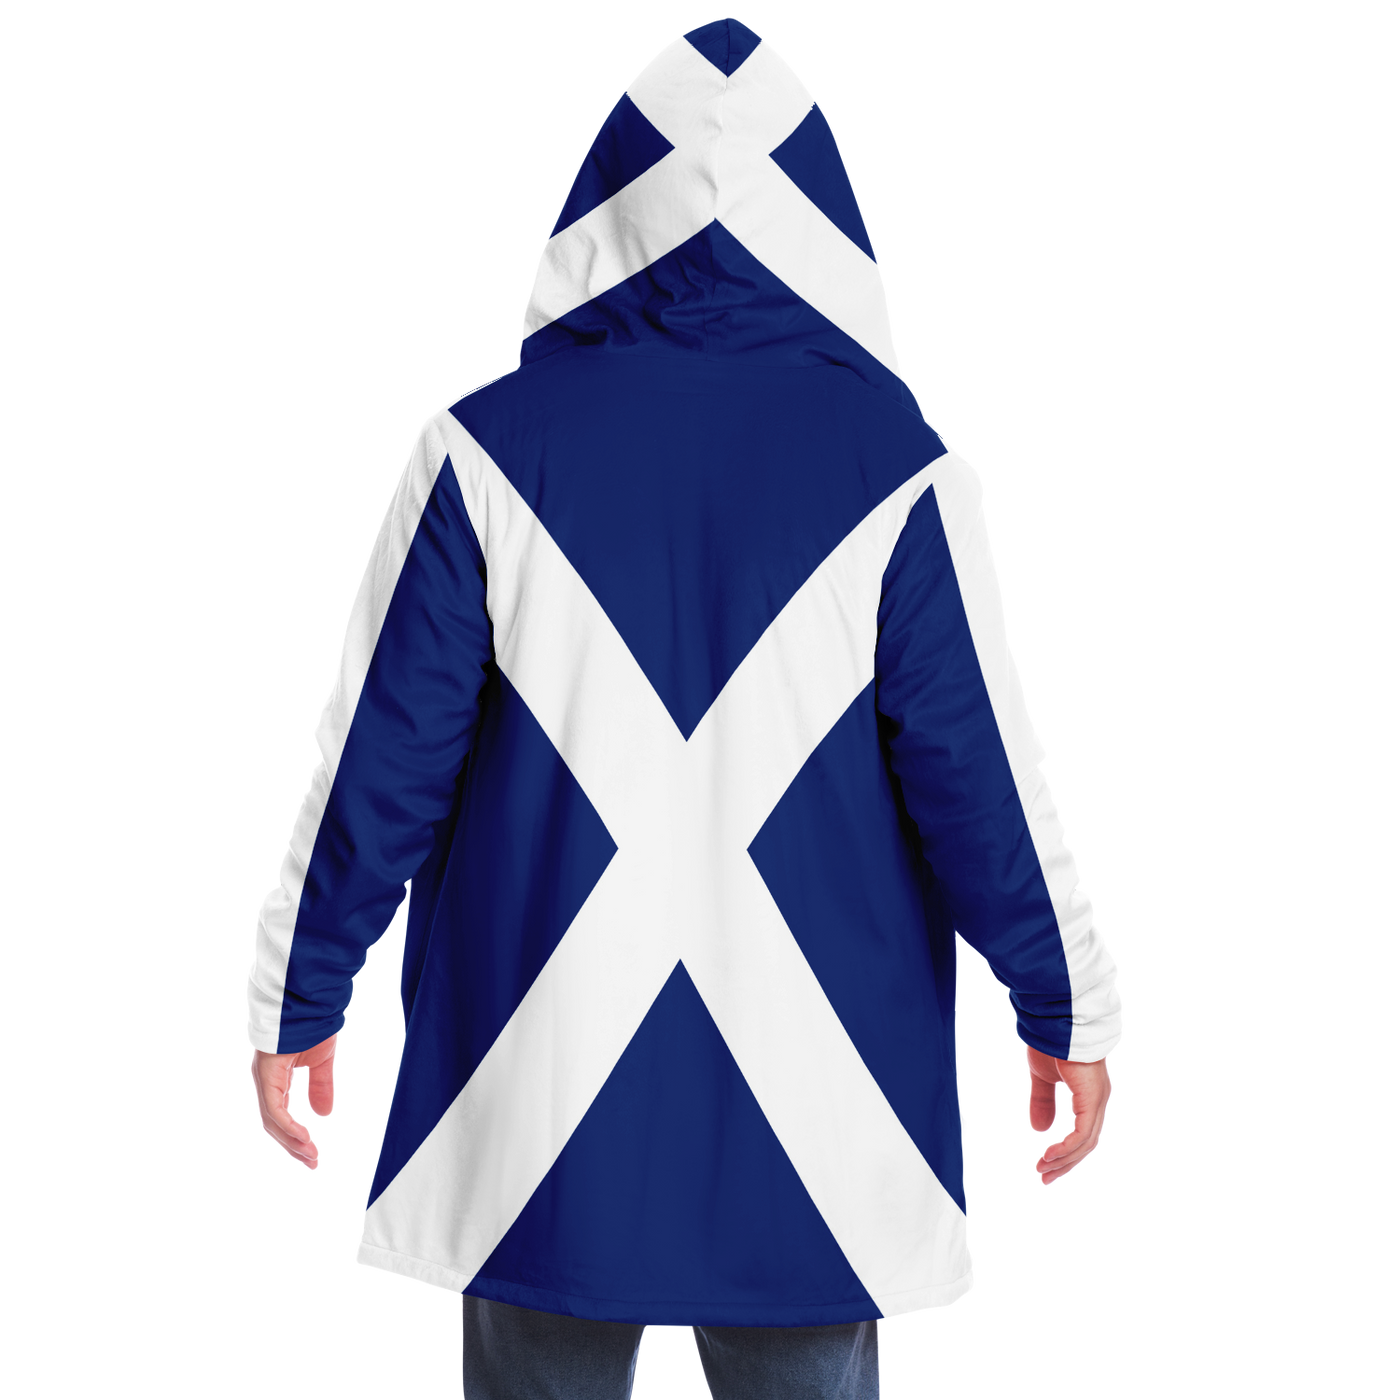 Capa de Microforro Polar con la Bandera de Escocia